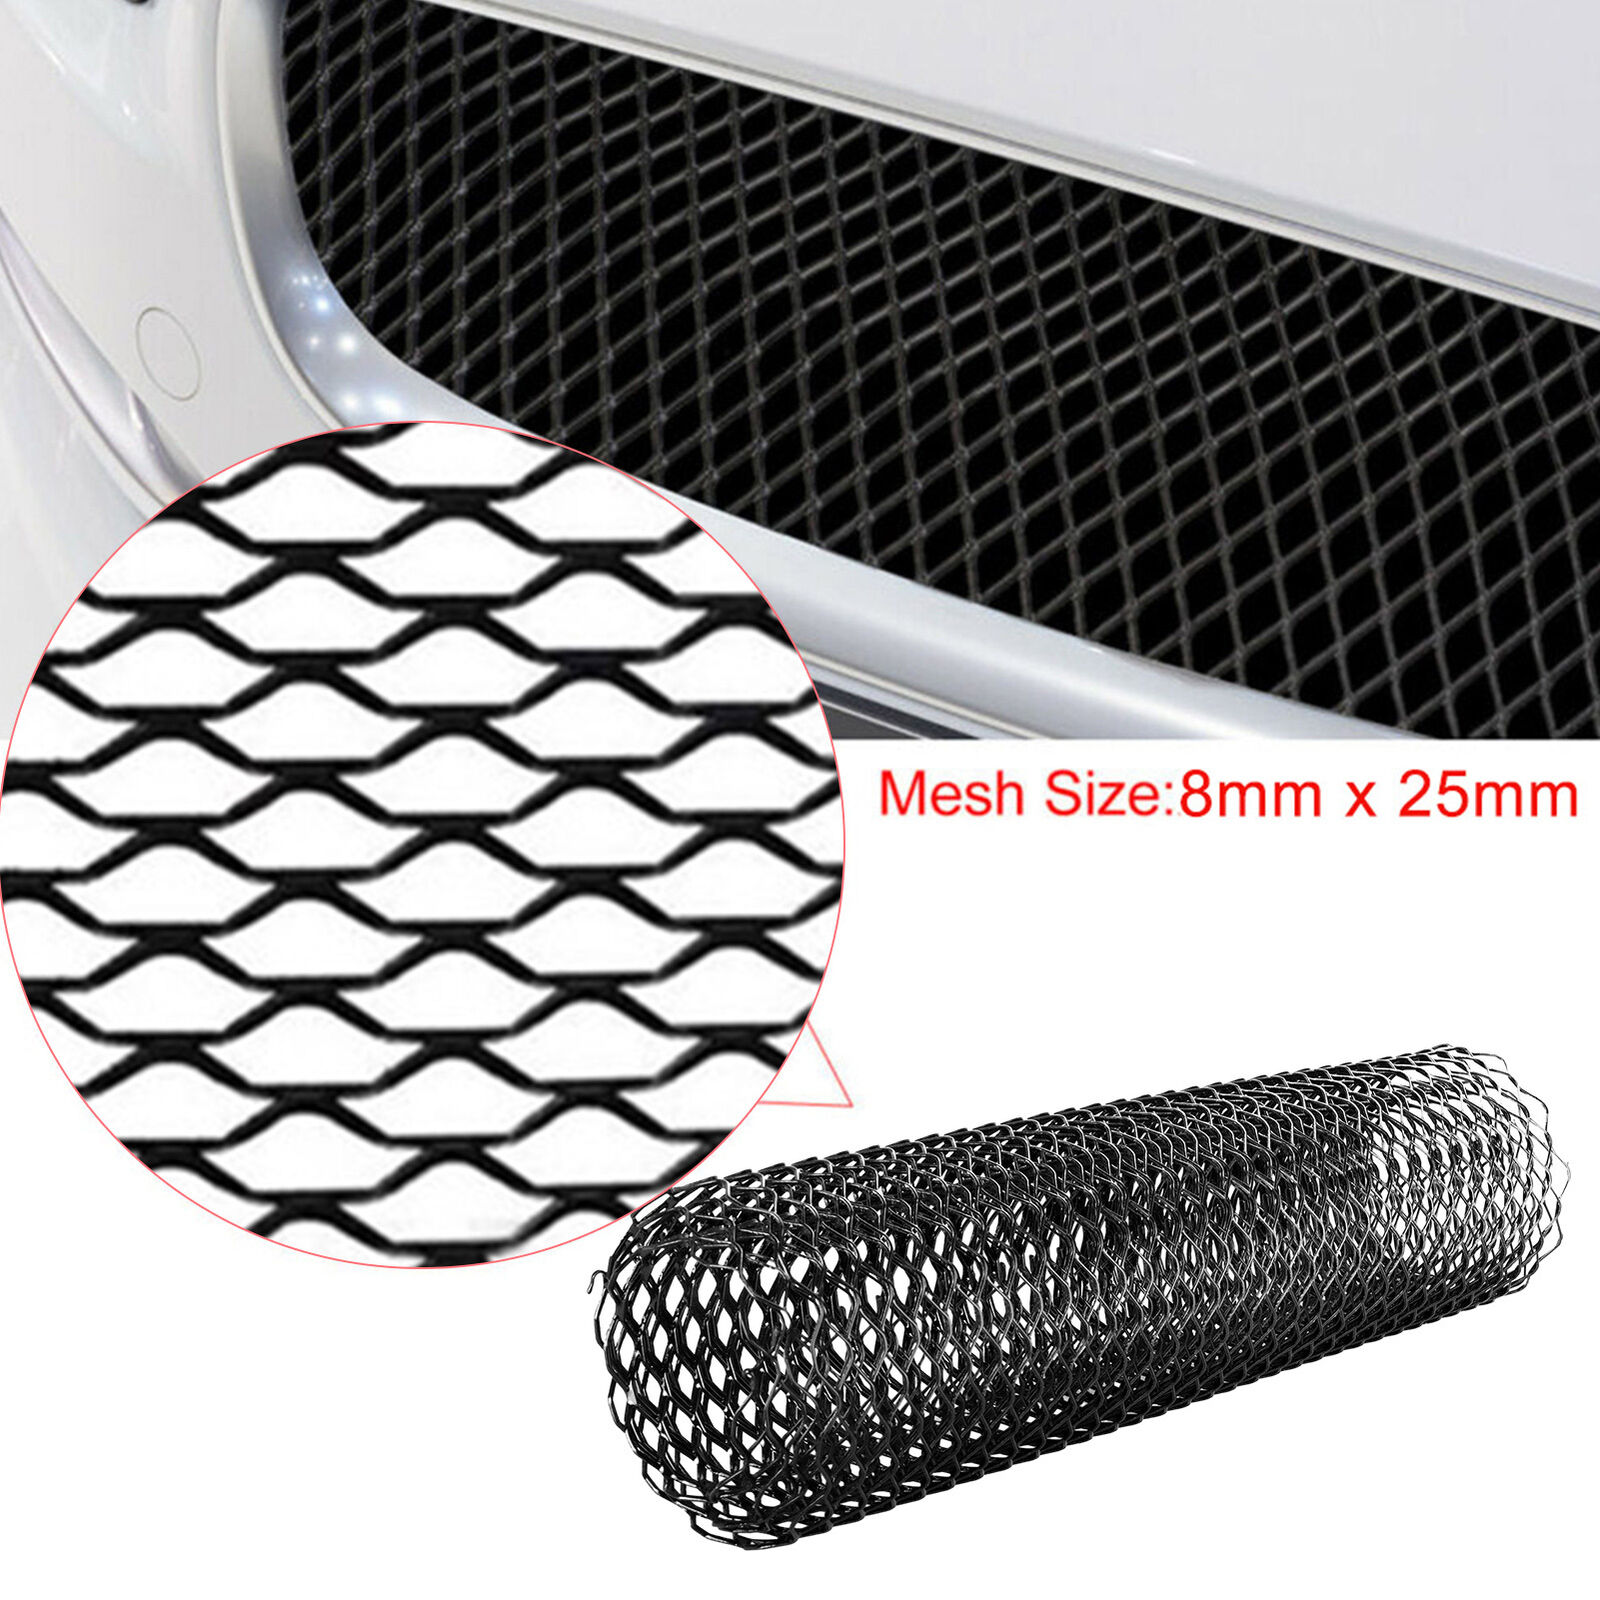 40\'\'x13\'\' Universal Black Car Grille Mesh Net Sheet Aluminum Rhombic Auto Grill